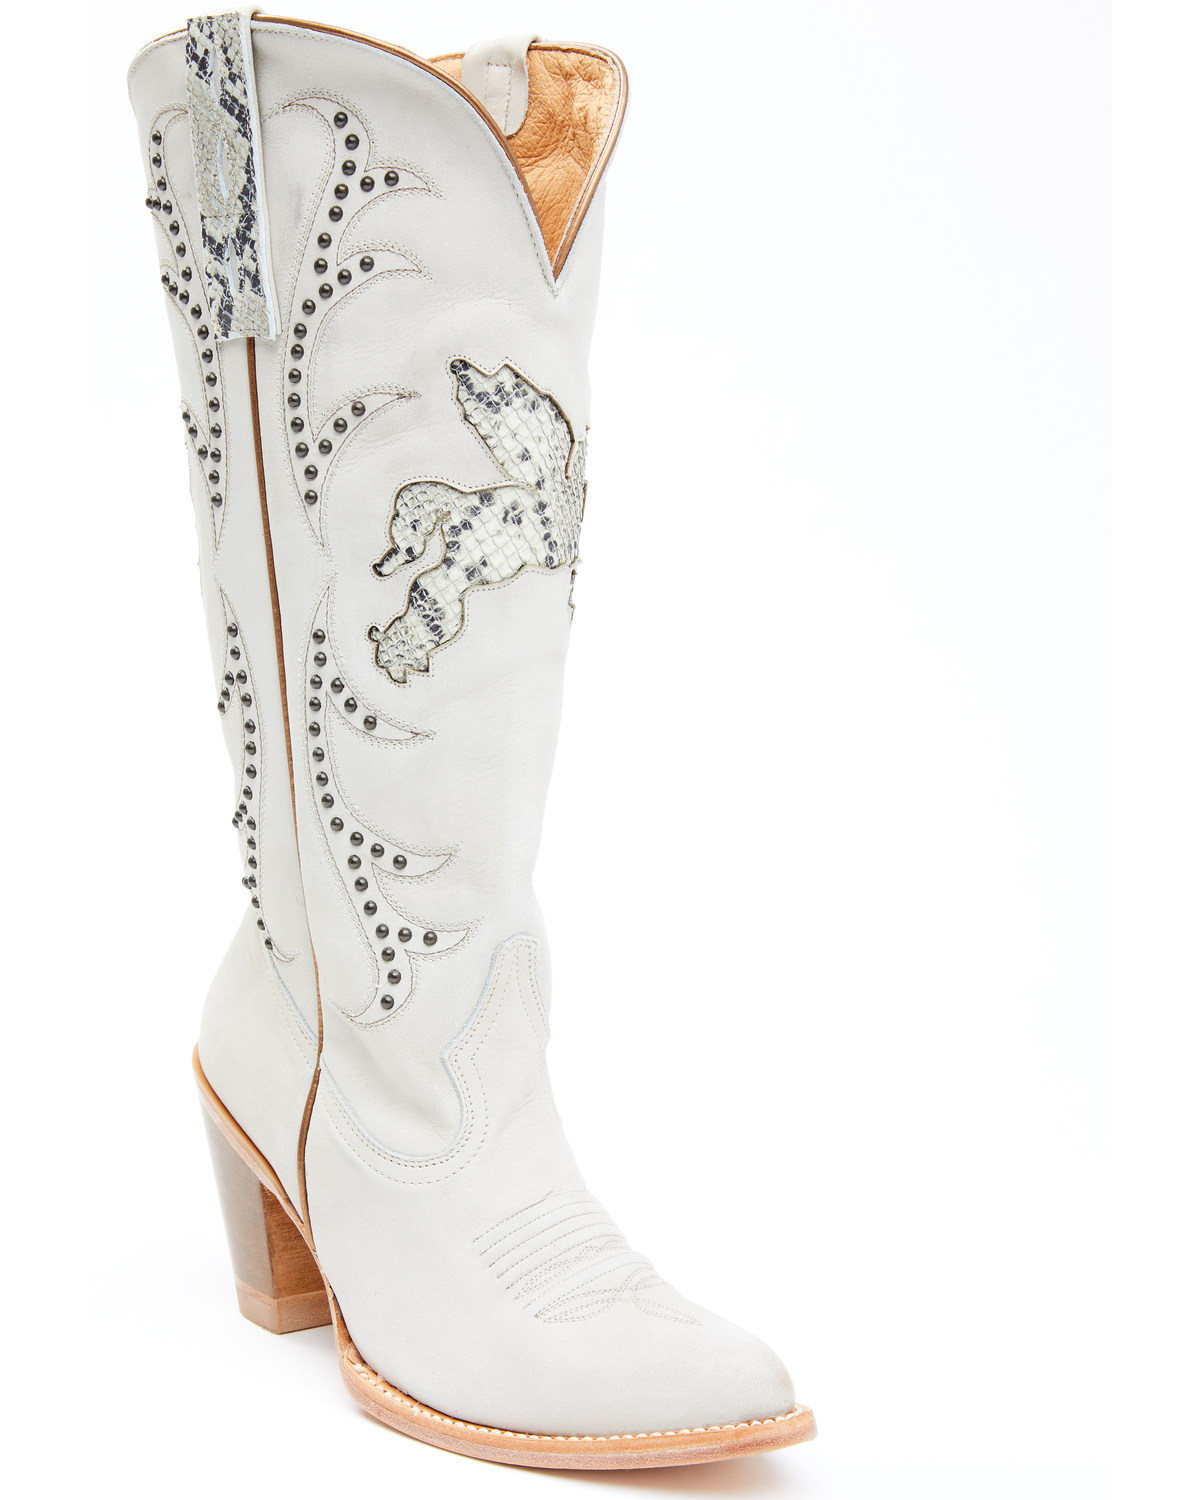 Idyllwind Women's Gambler Western Boots - Medium Toe